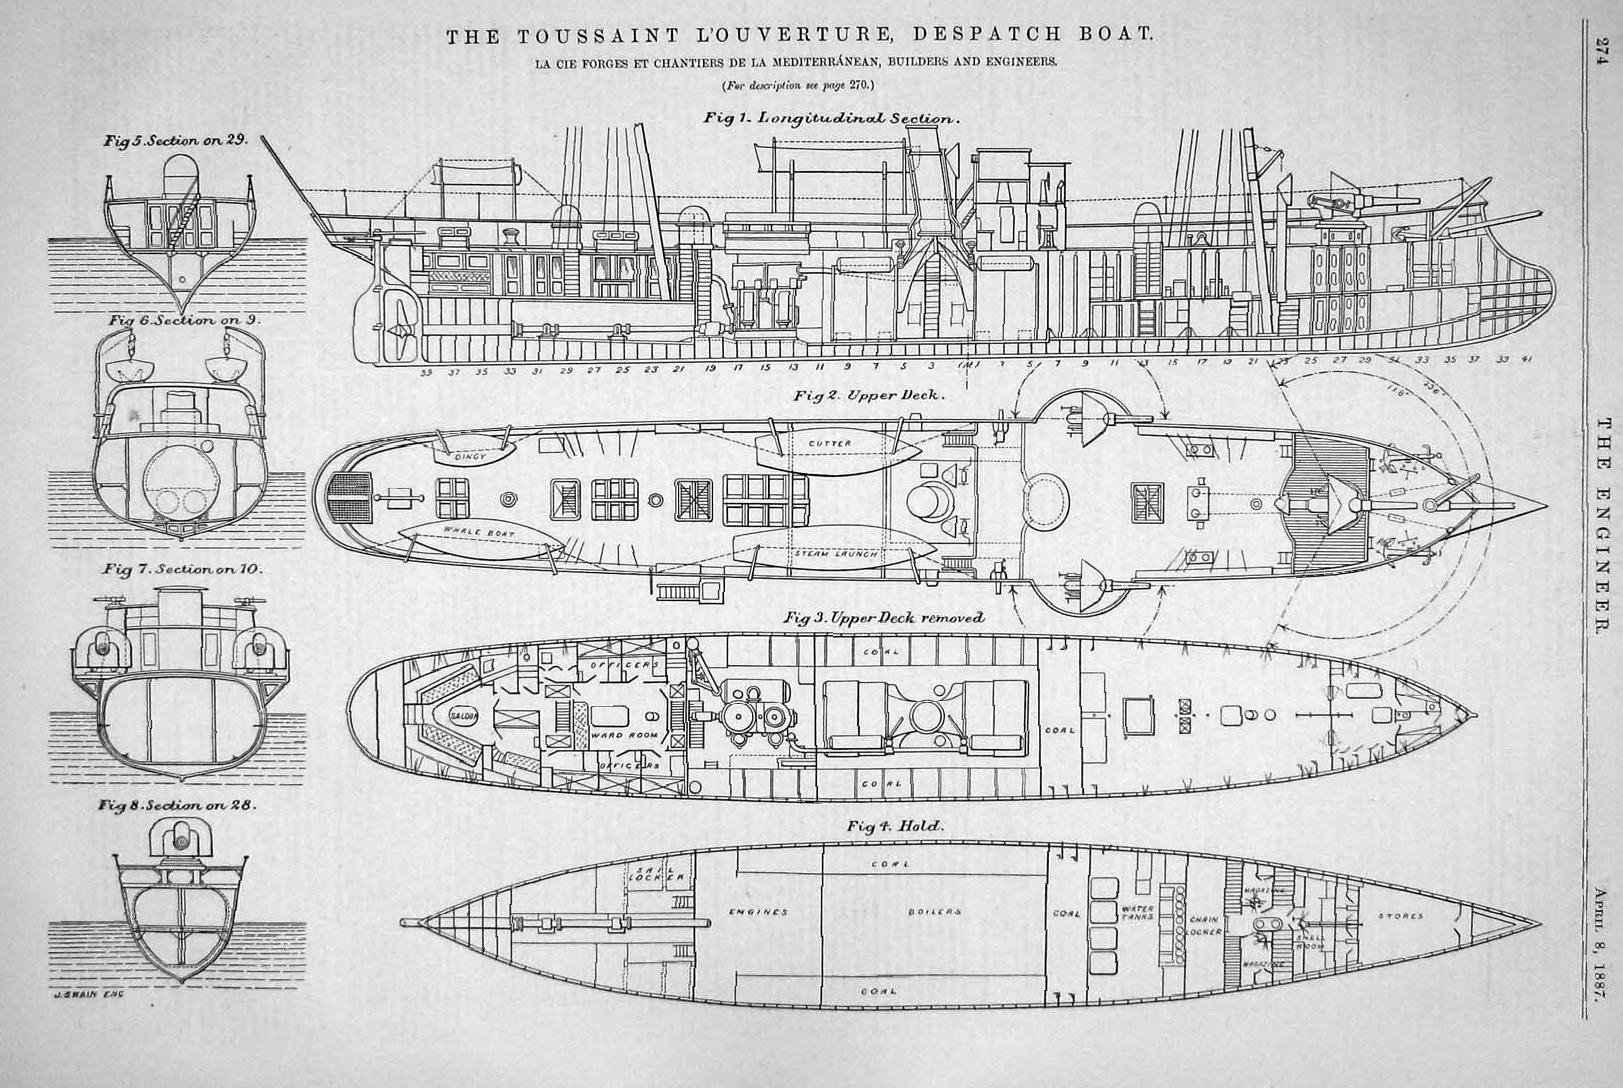 Despatch Boat Diagram Plan Chantiers.jpg